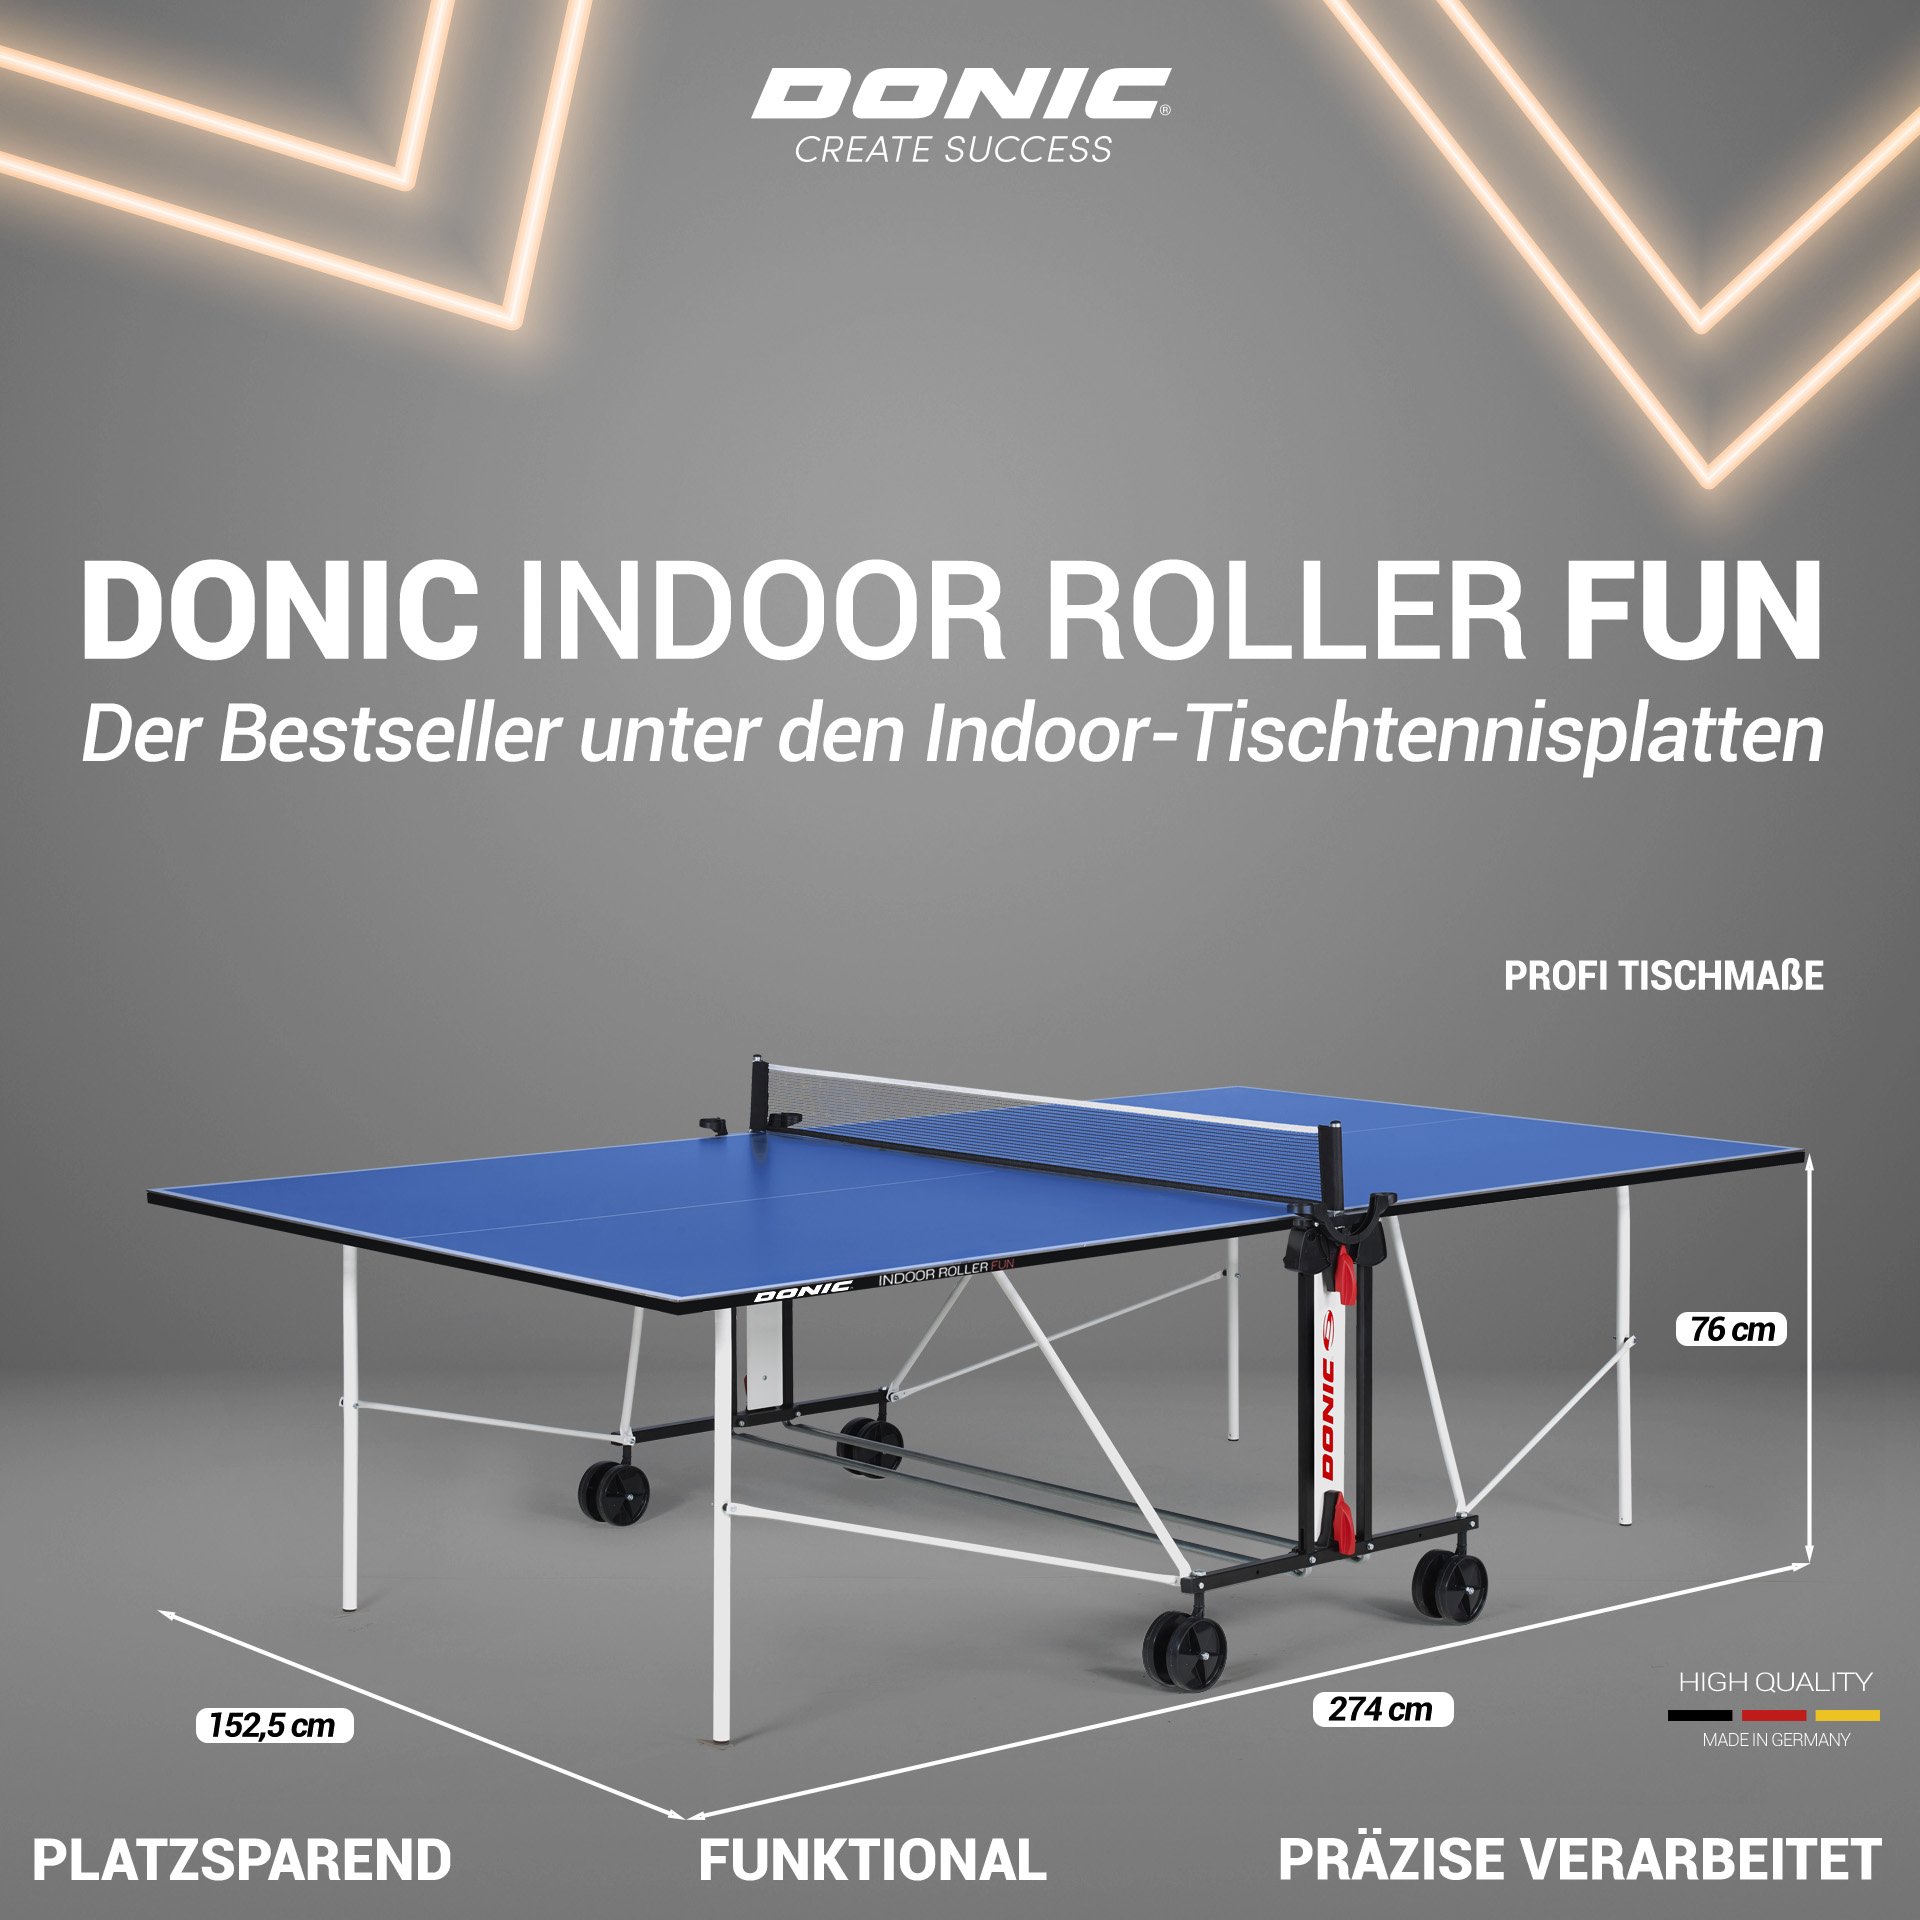 SUCCESS Fun | CREATE Indoor Roller Donic